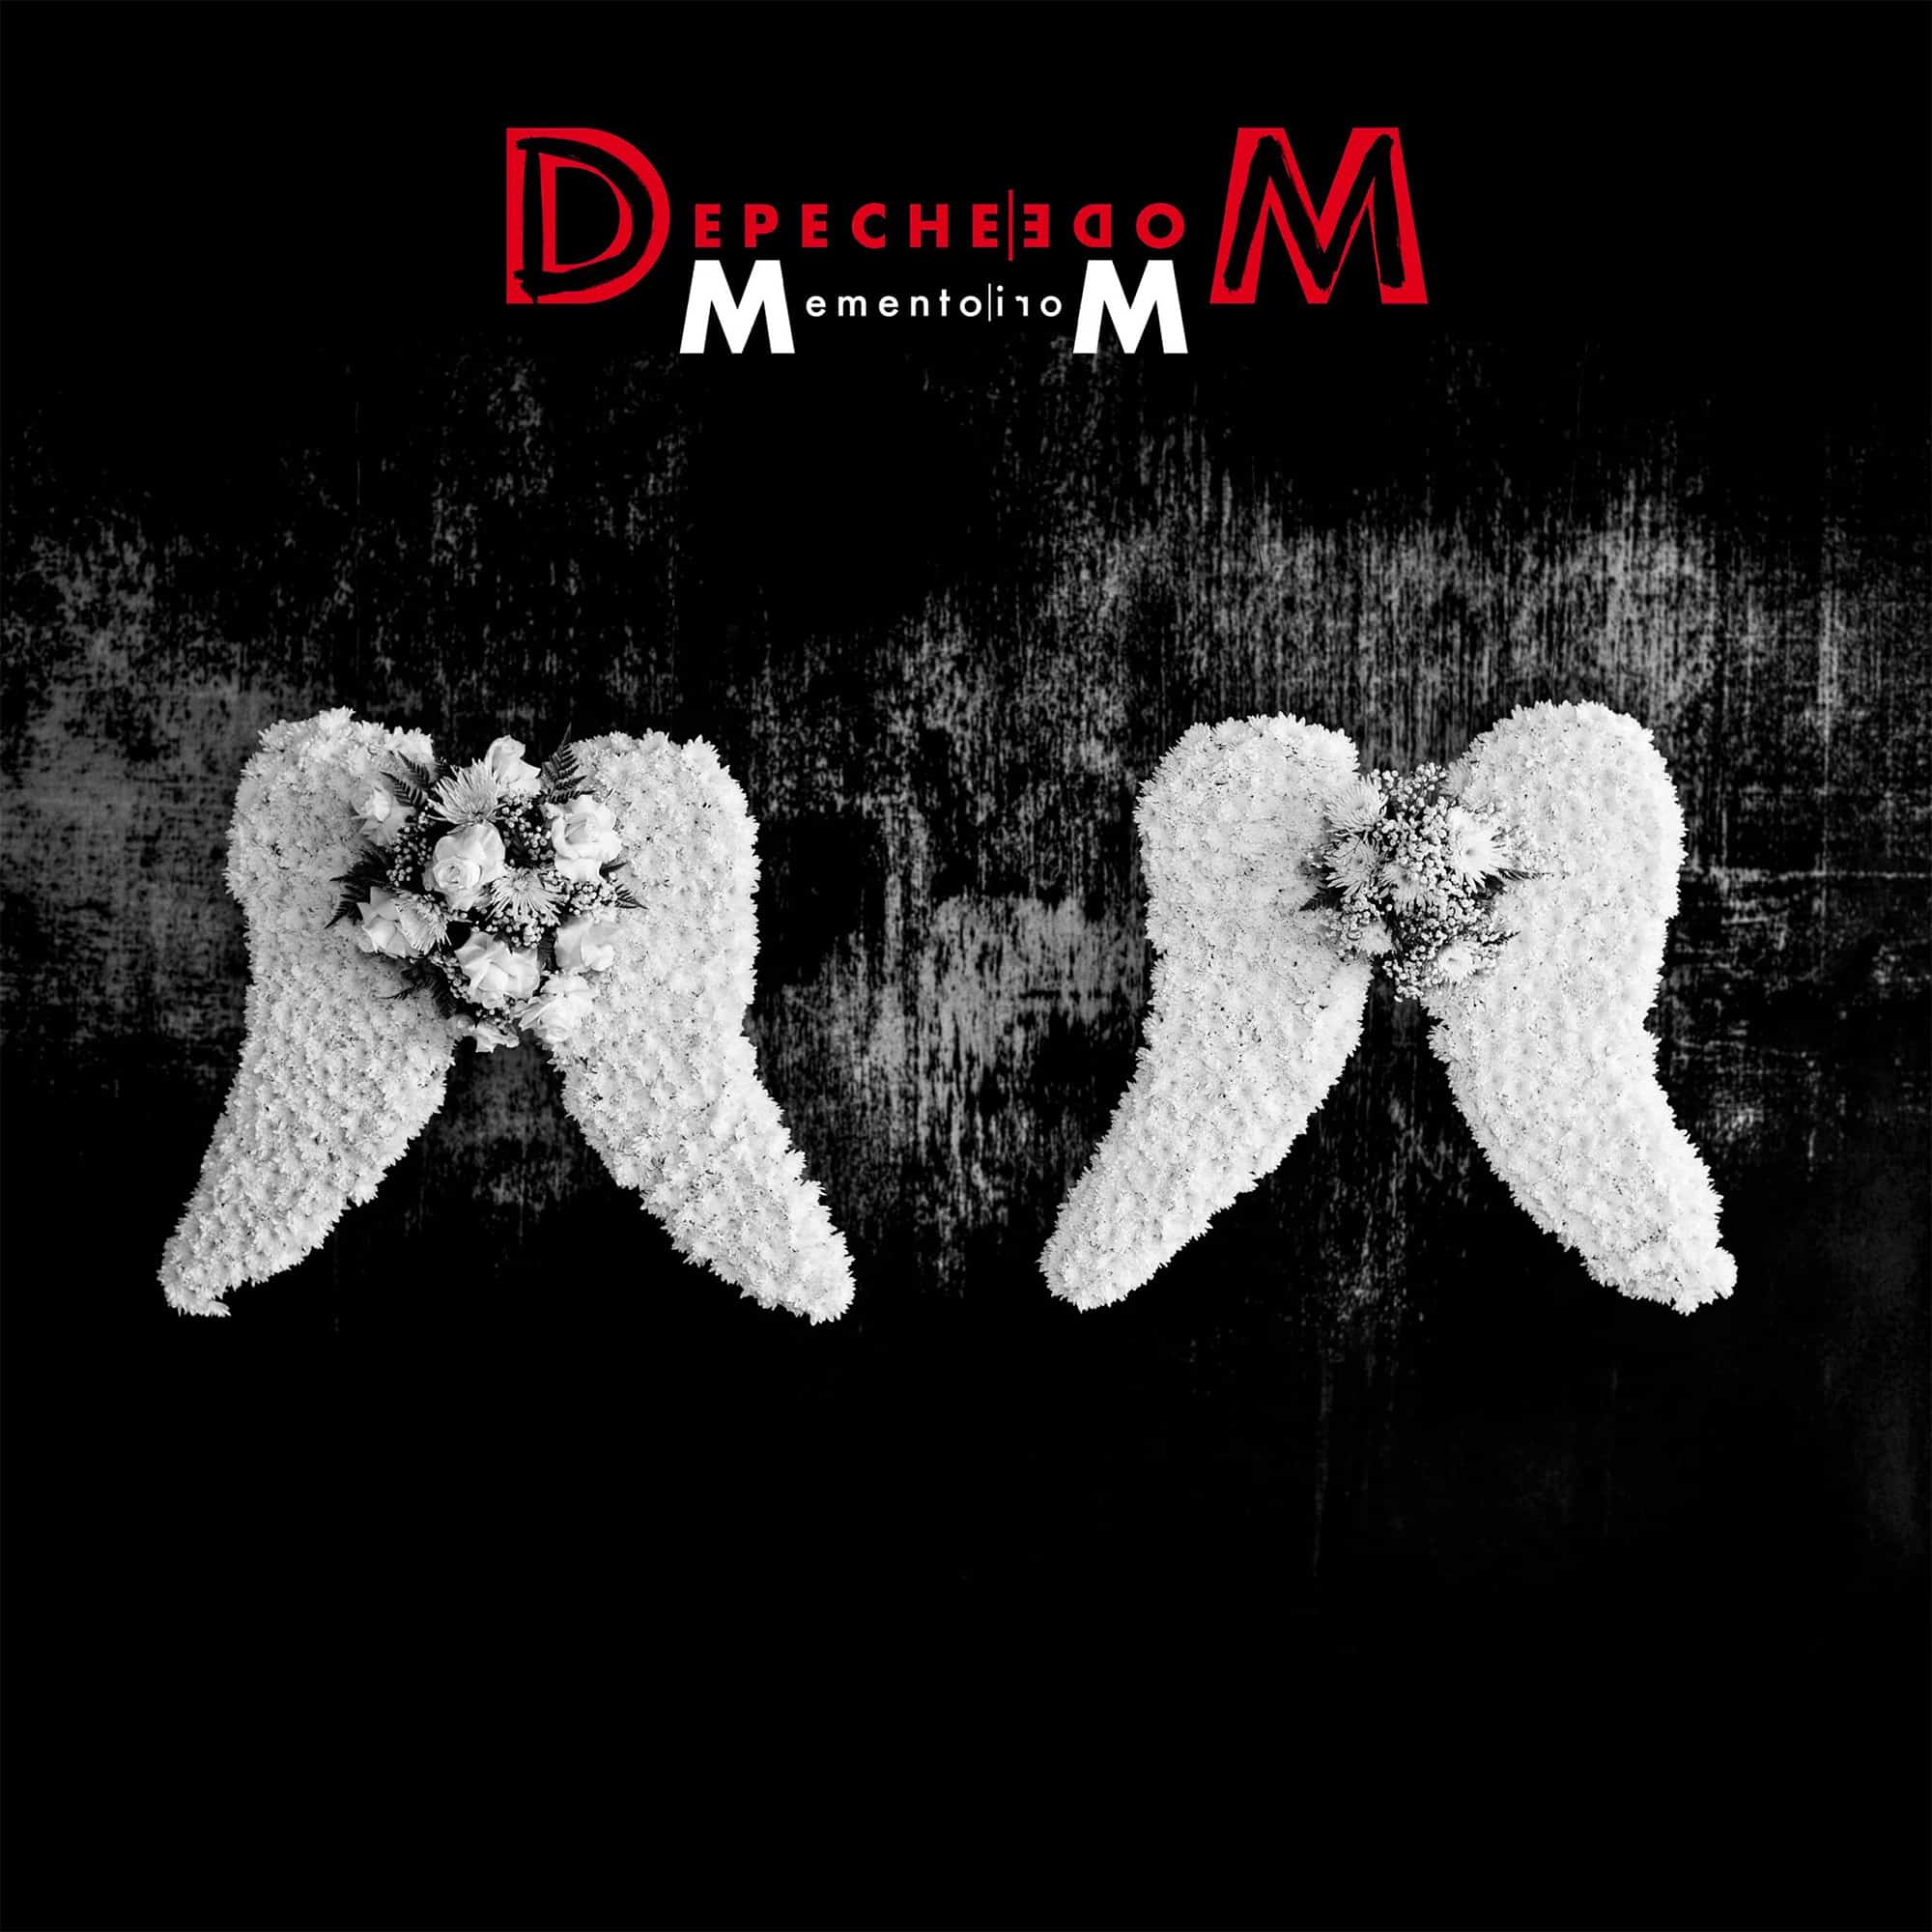 depeche-mode-memento-mori-album-cover.jpg